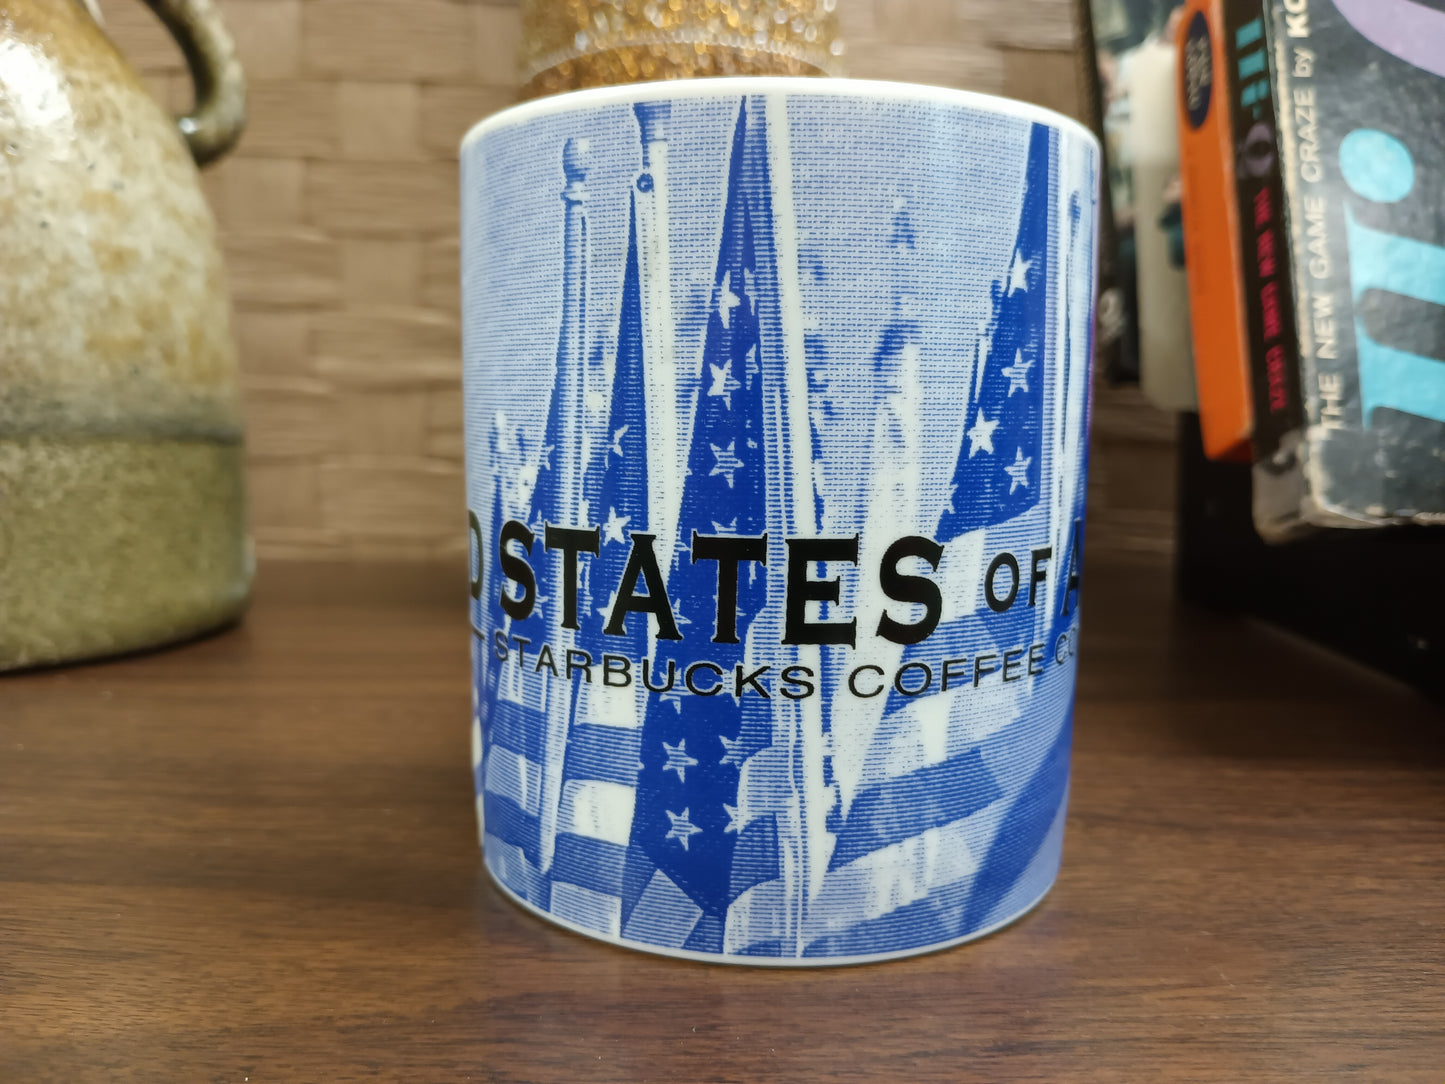 Starbucks United States of America Mug